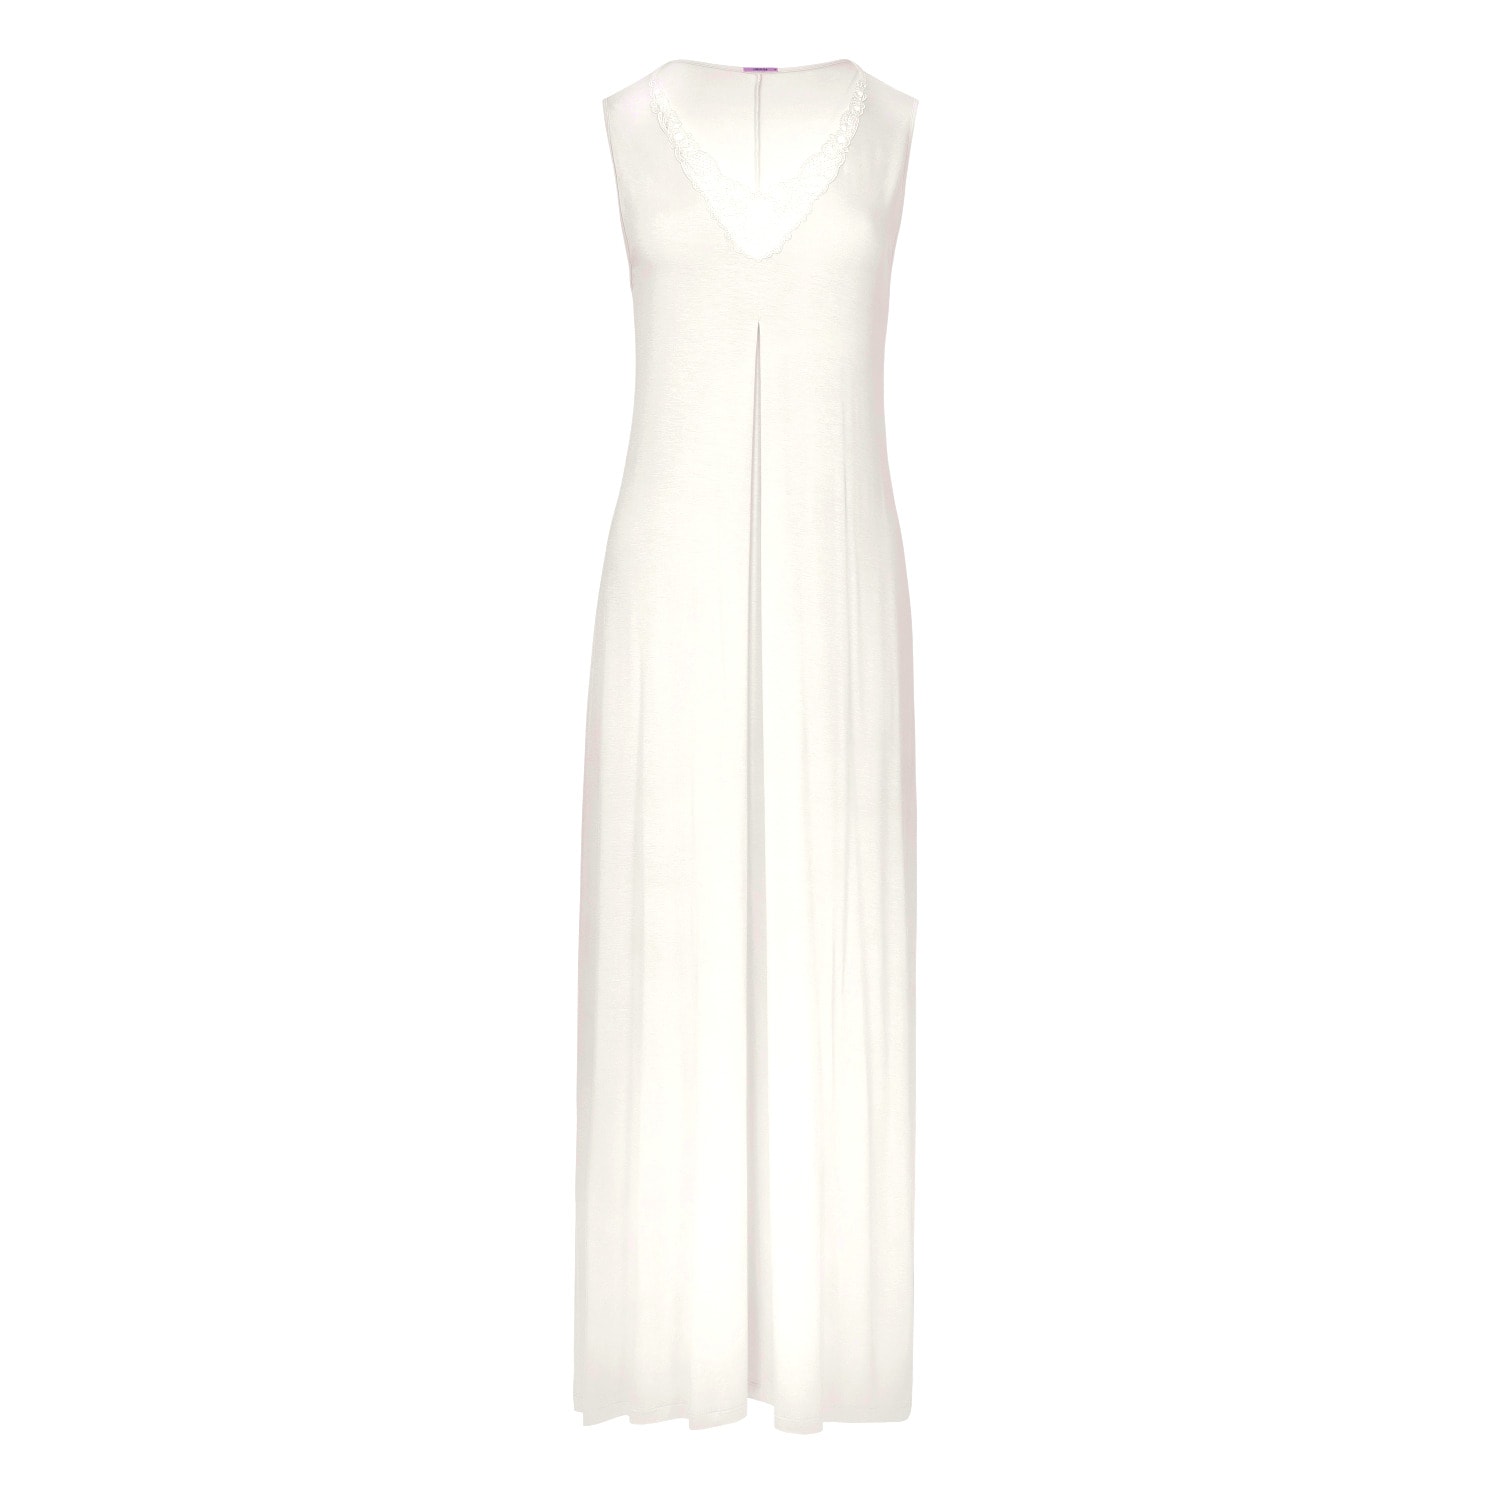 Oh!zuza Night&day Women's White Long Nightdress - Viscose With Embroidery - Ivory